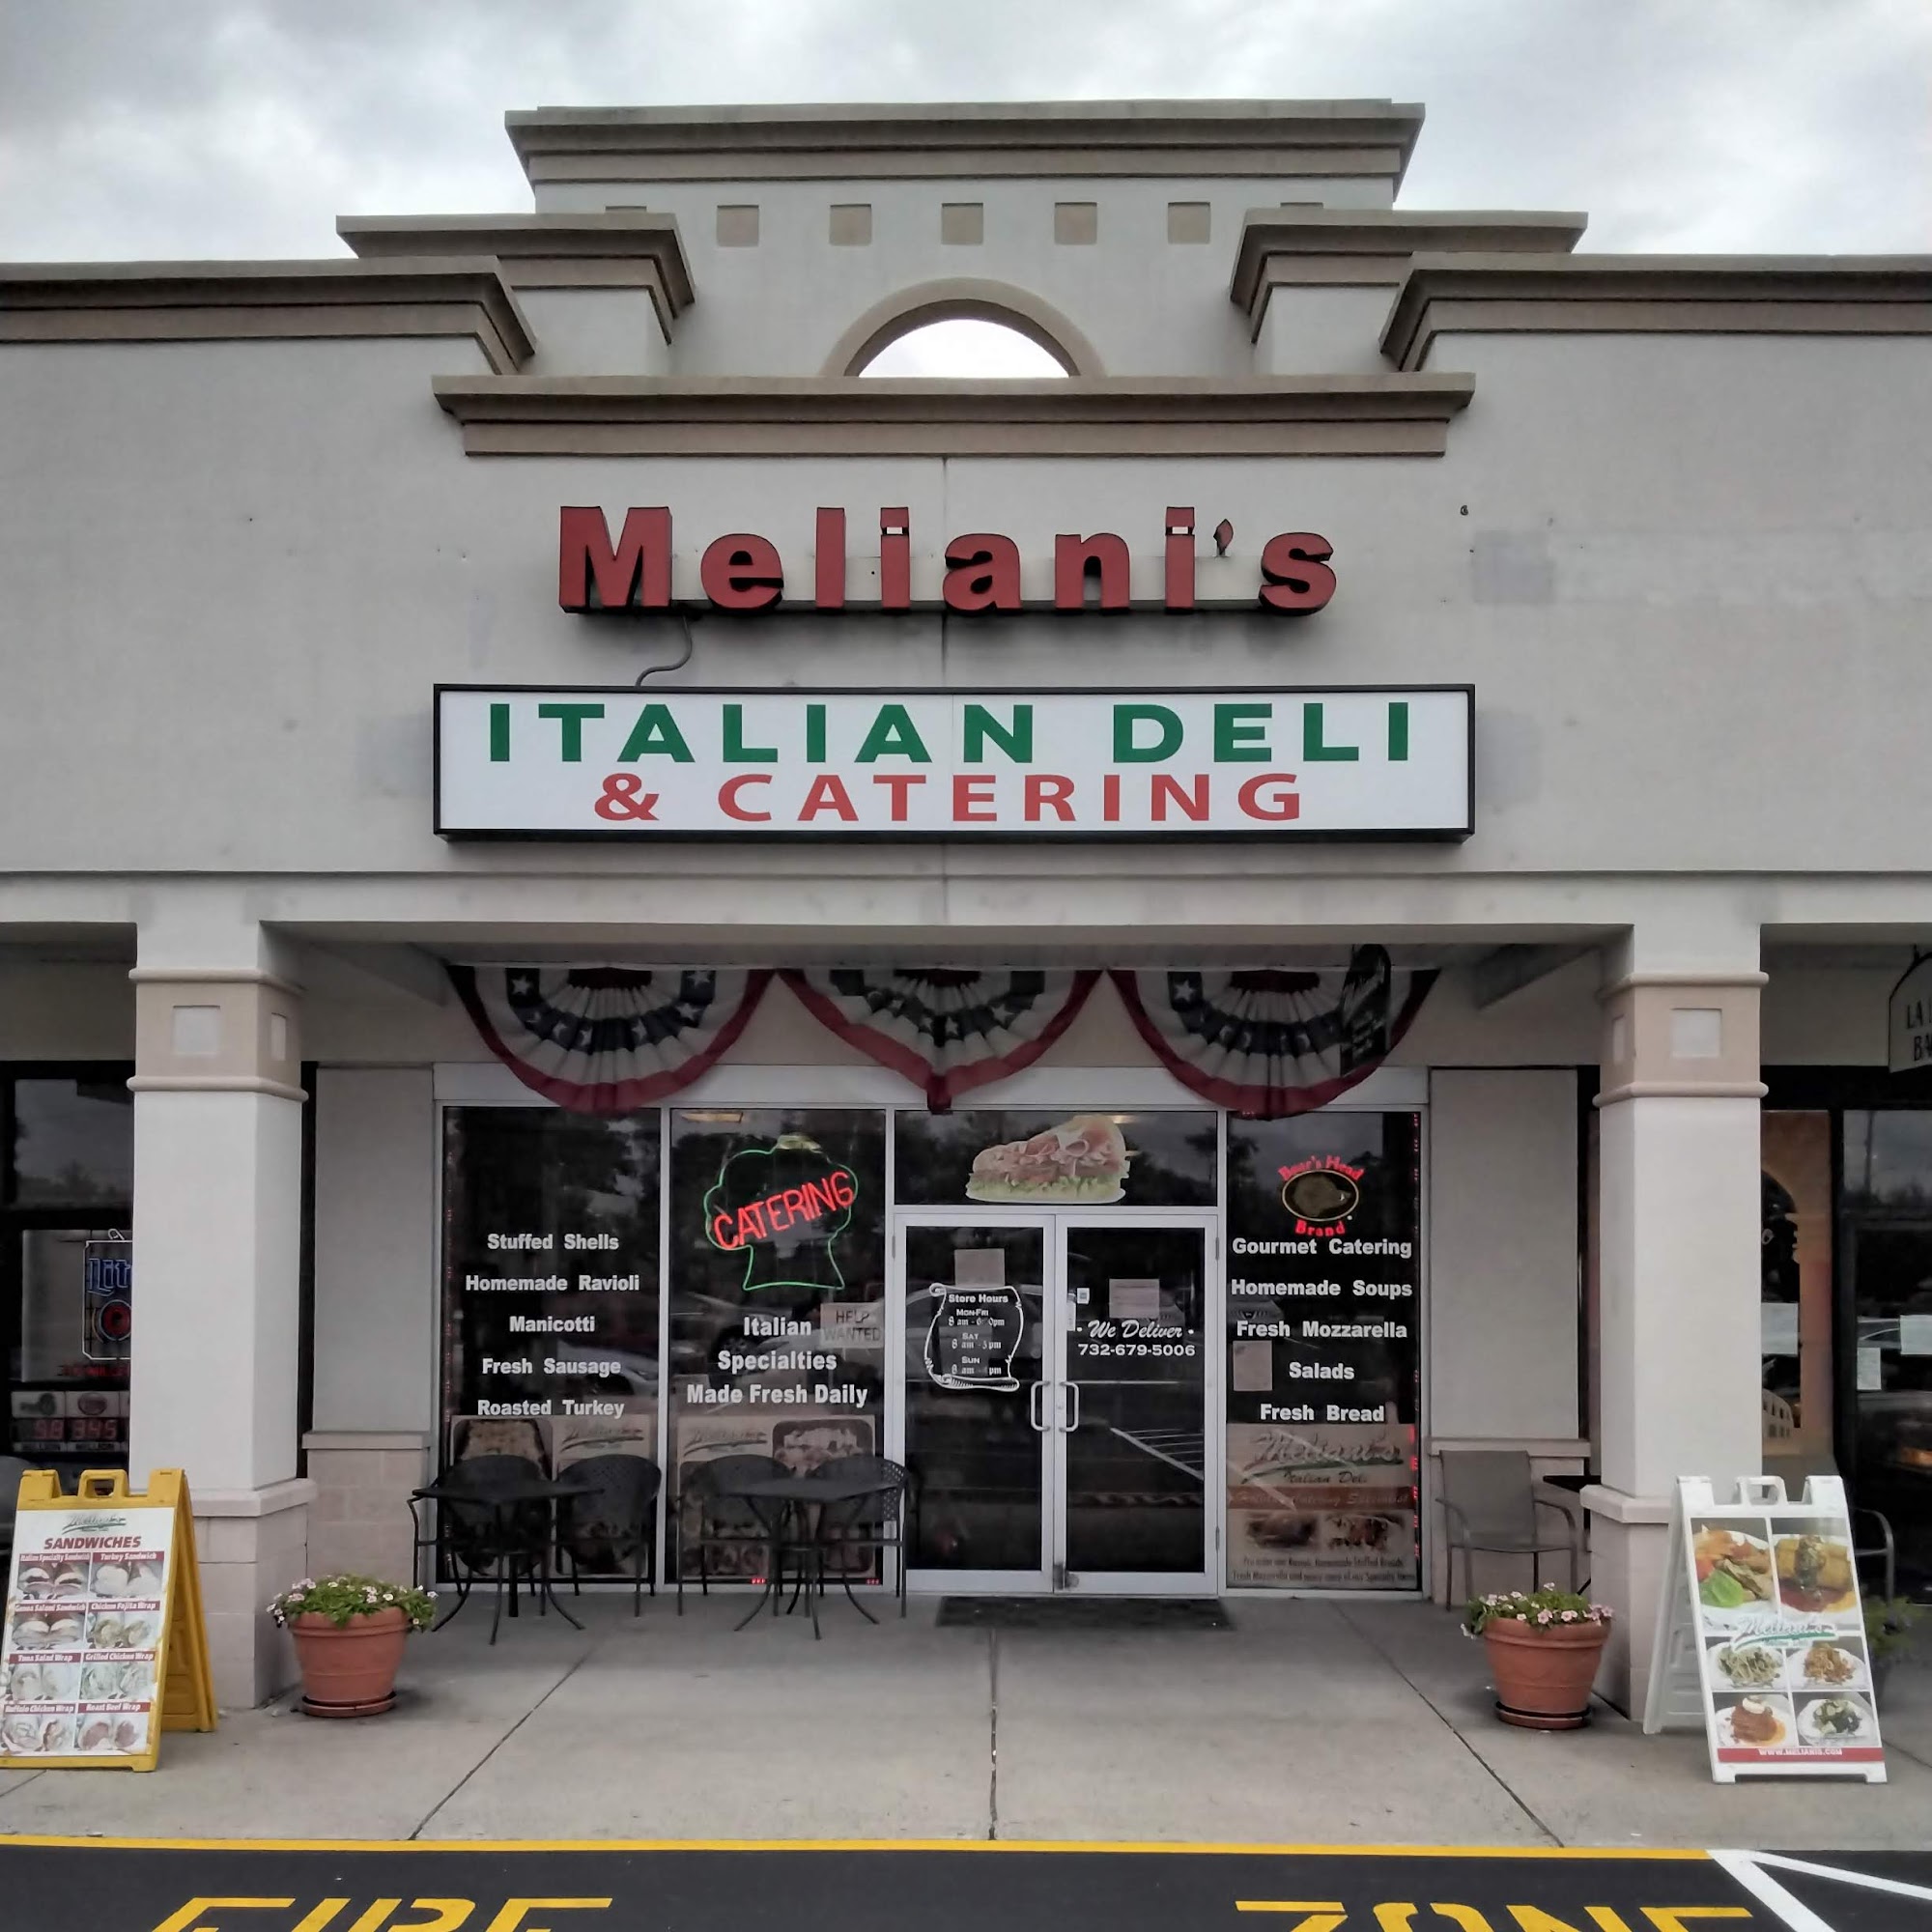 Meliani’s Italian Deli & Catering